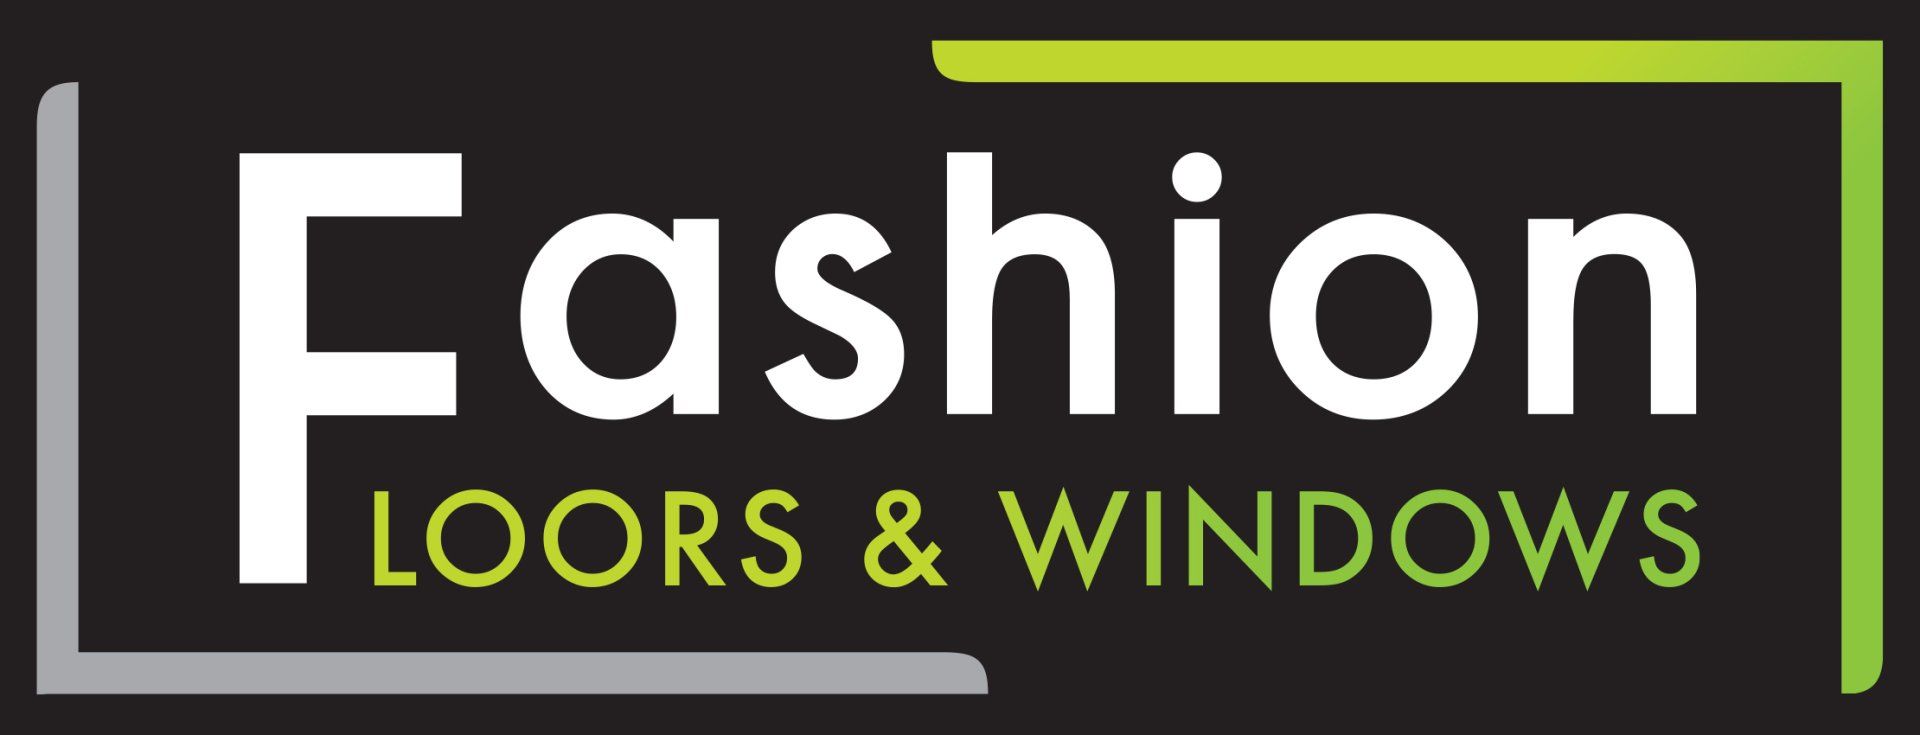 Fashion Floors & Windows Logo